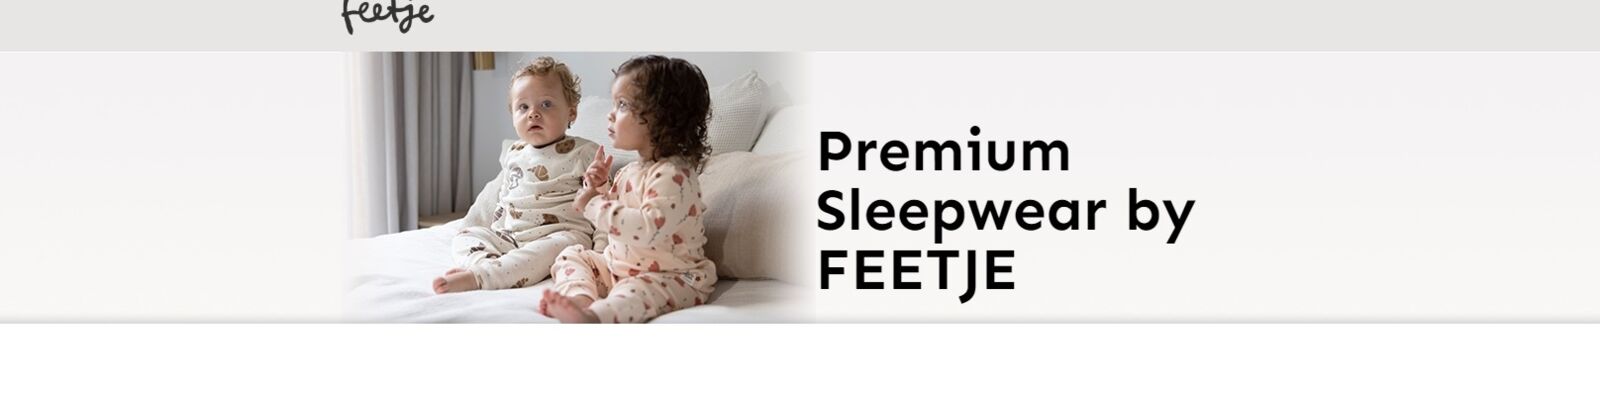 Feetje premium sleepware slider nw2.jpg